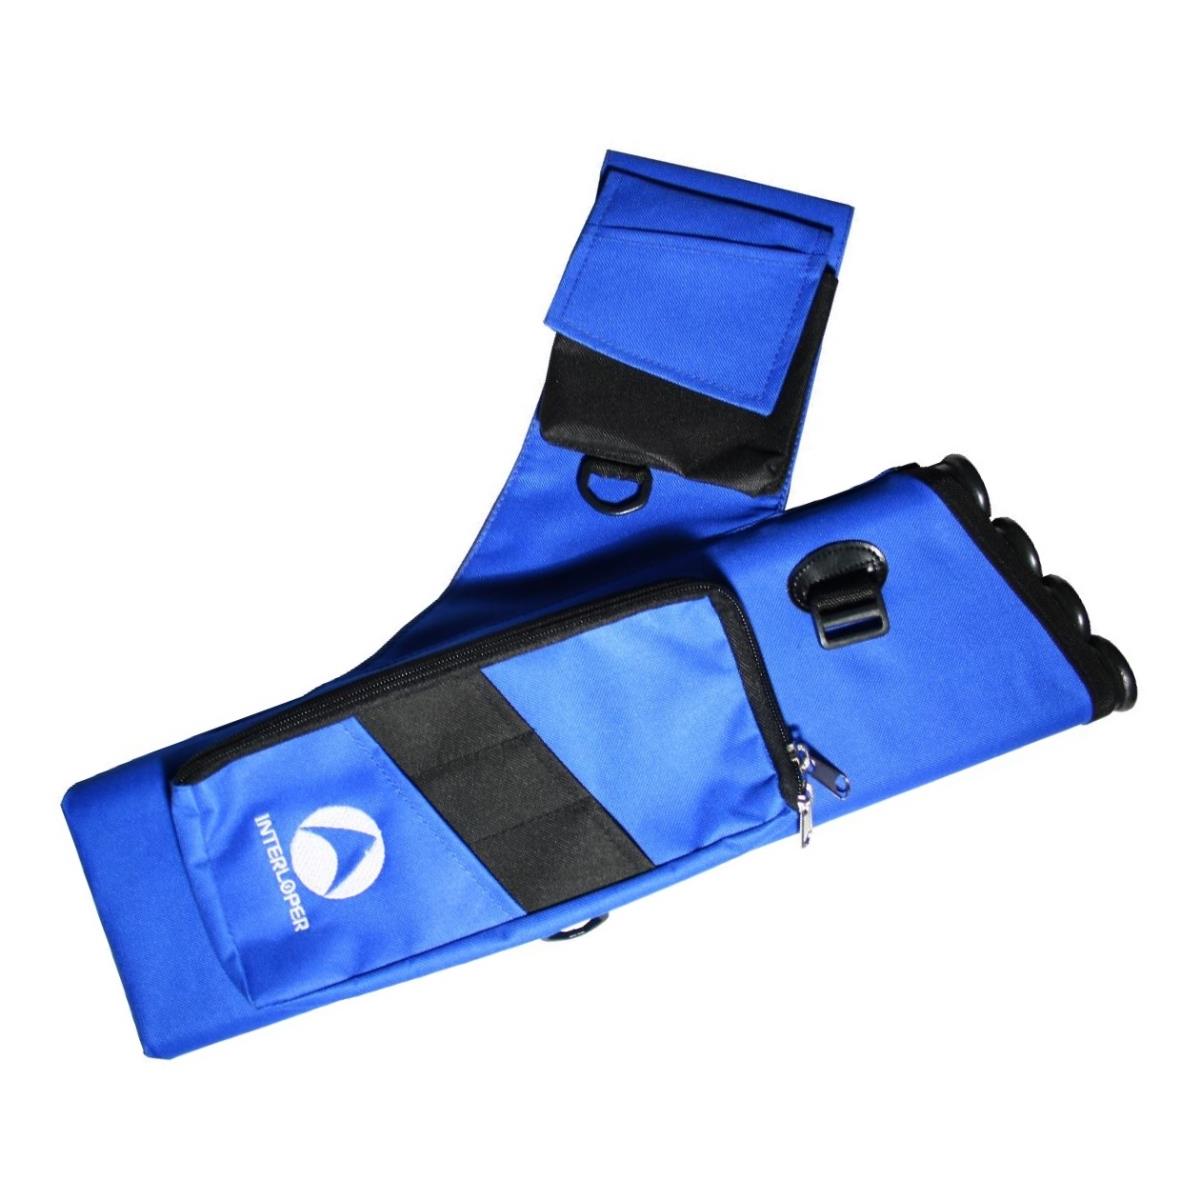 Колчан поясной advanced (синий) Centershot рюкзак на молнии 2 наружных кармана цвет синий